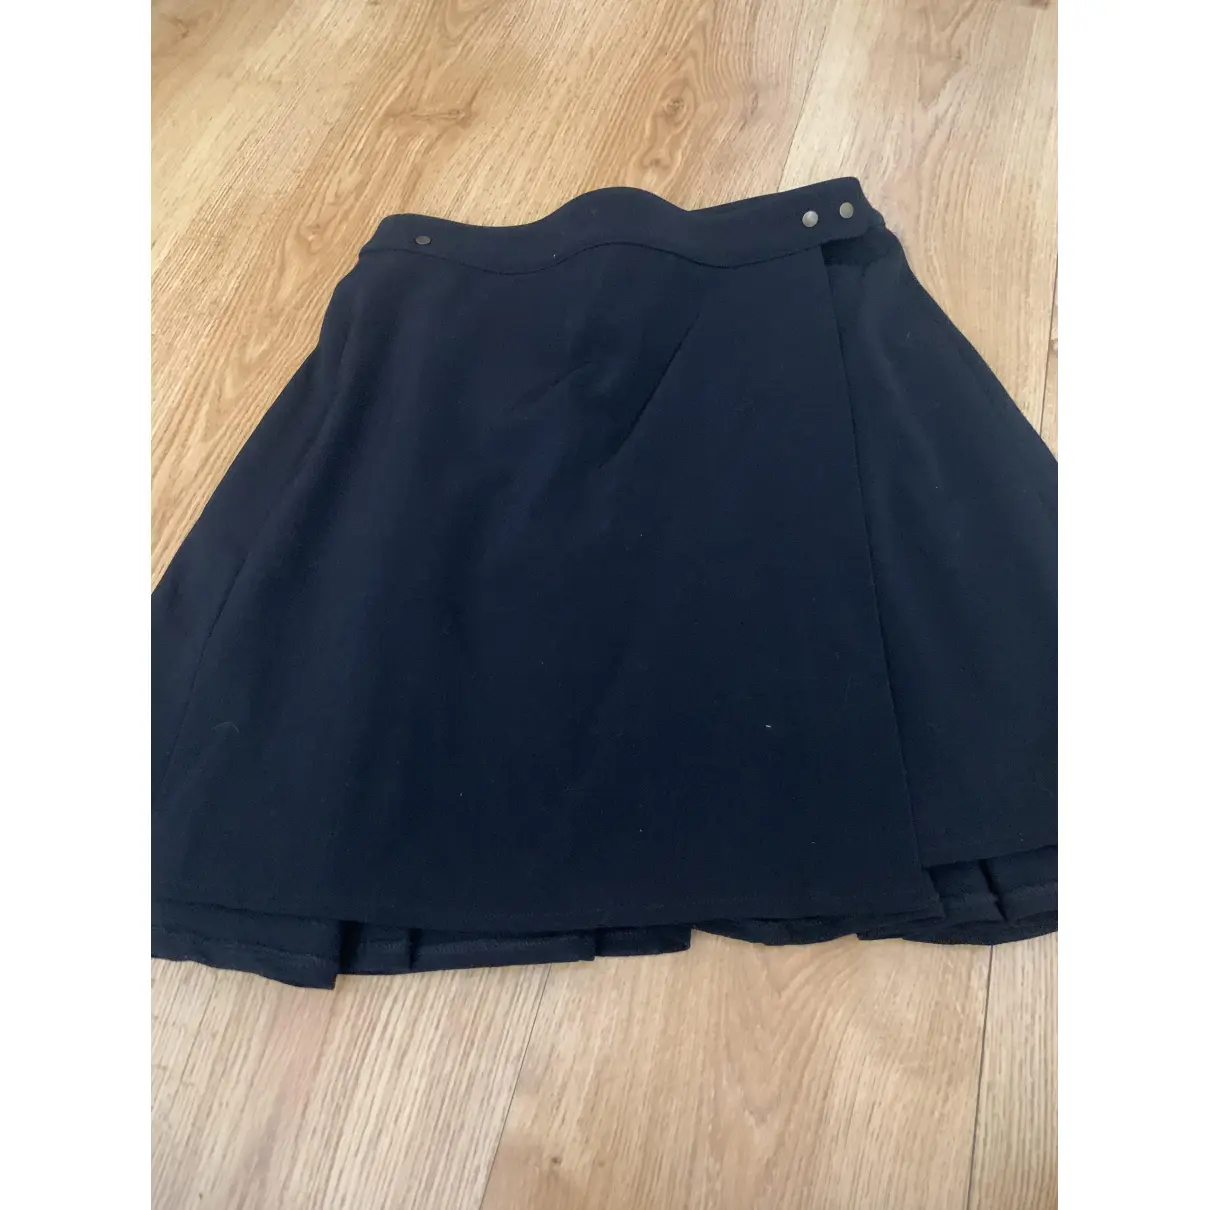 Buy Plein Sud Mini skirt online